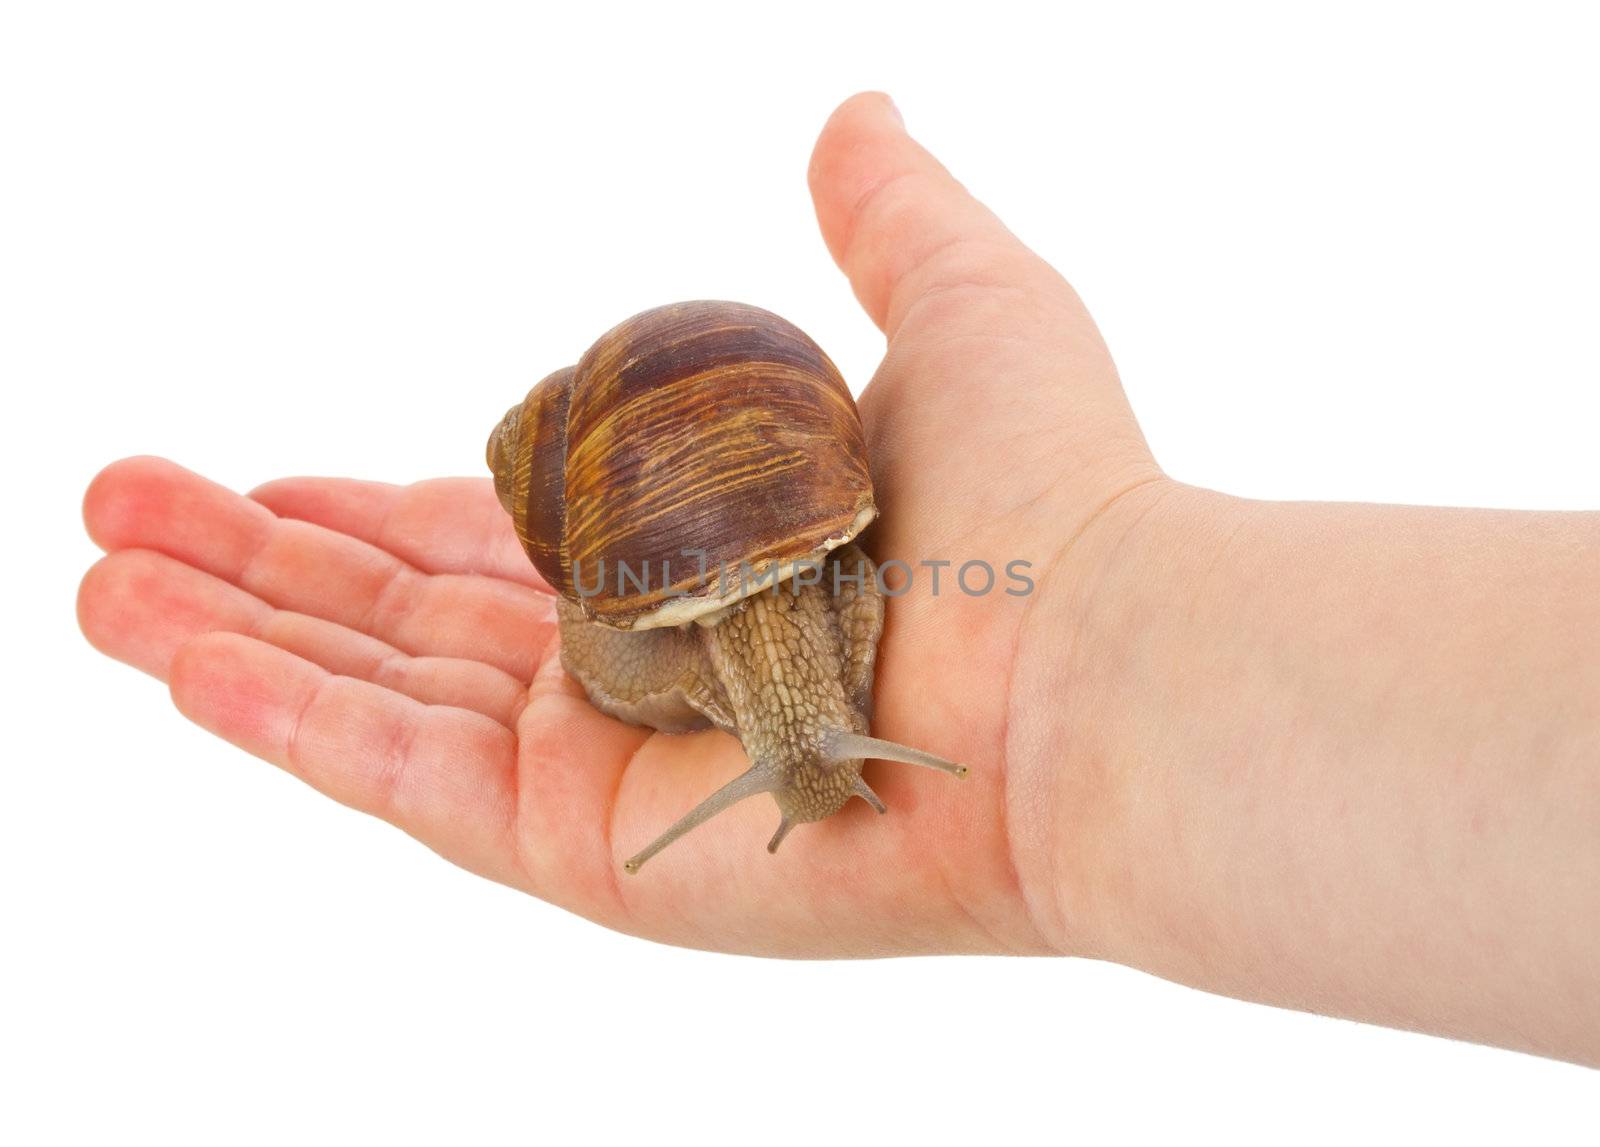 snail in hand by Alekcey